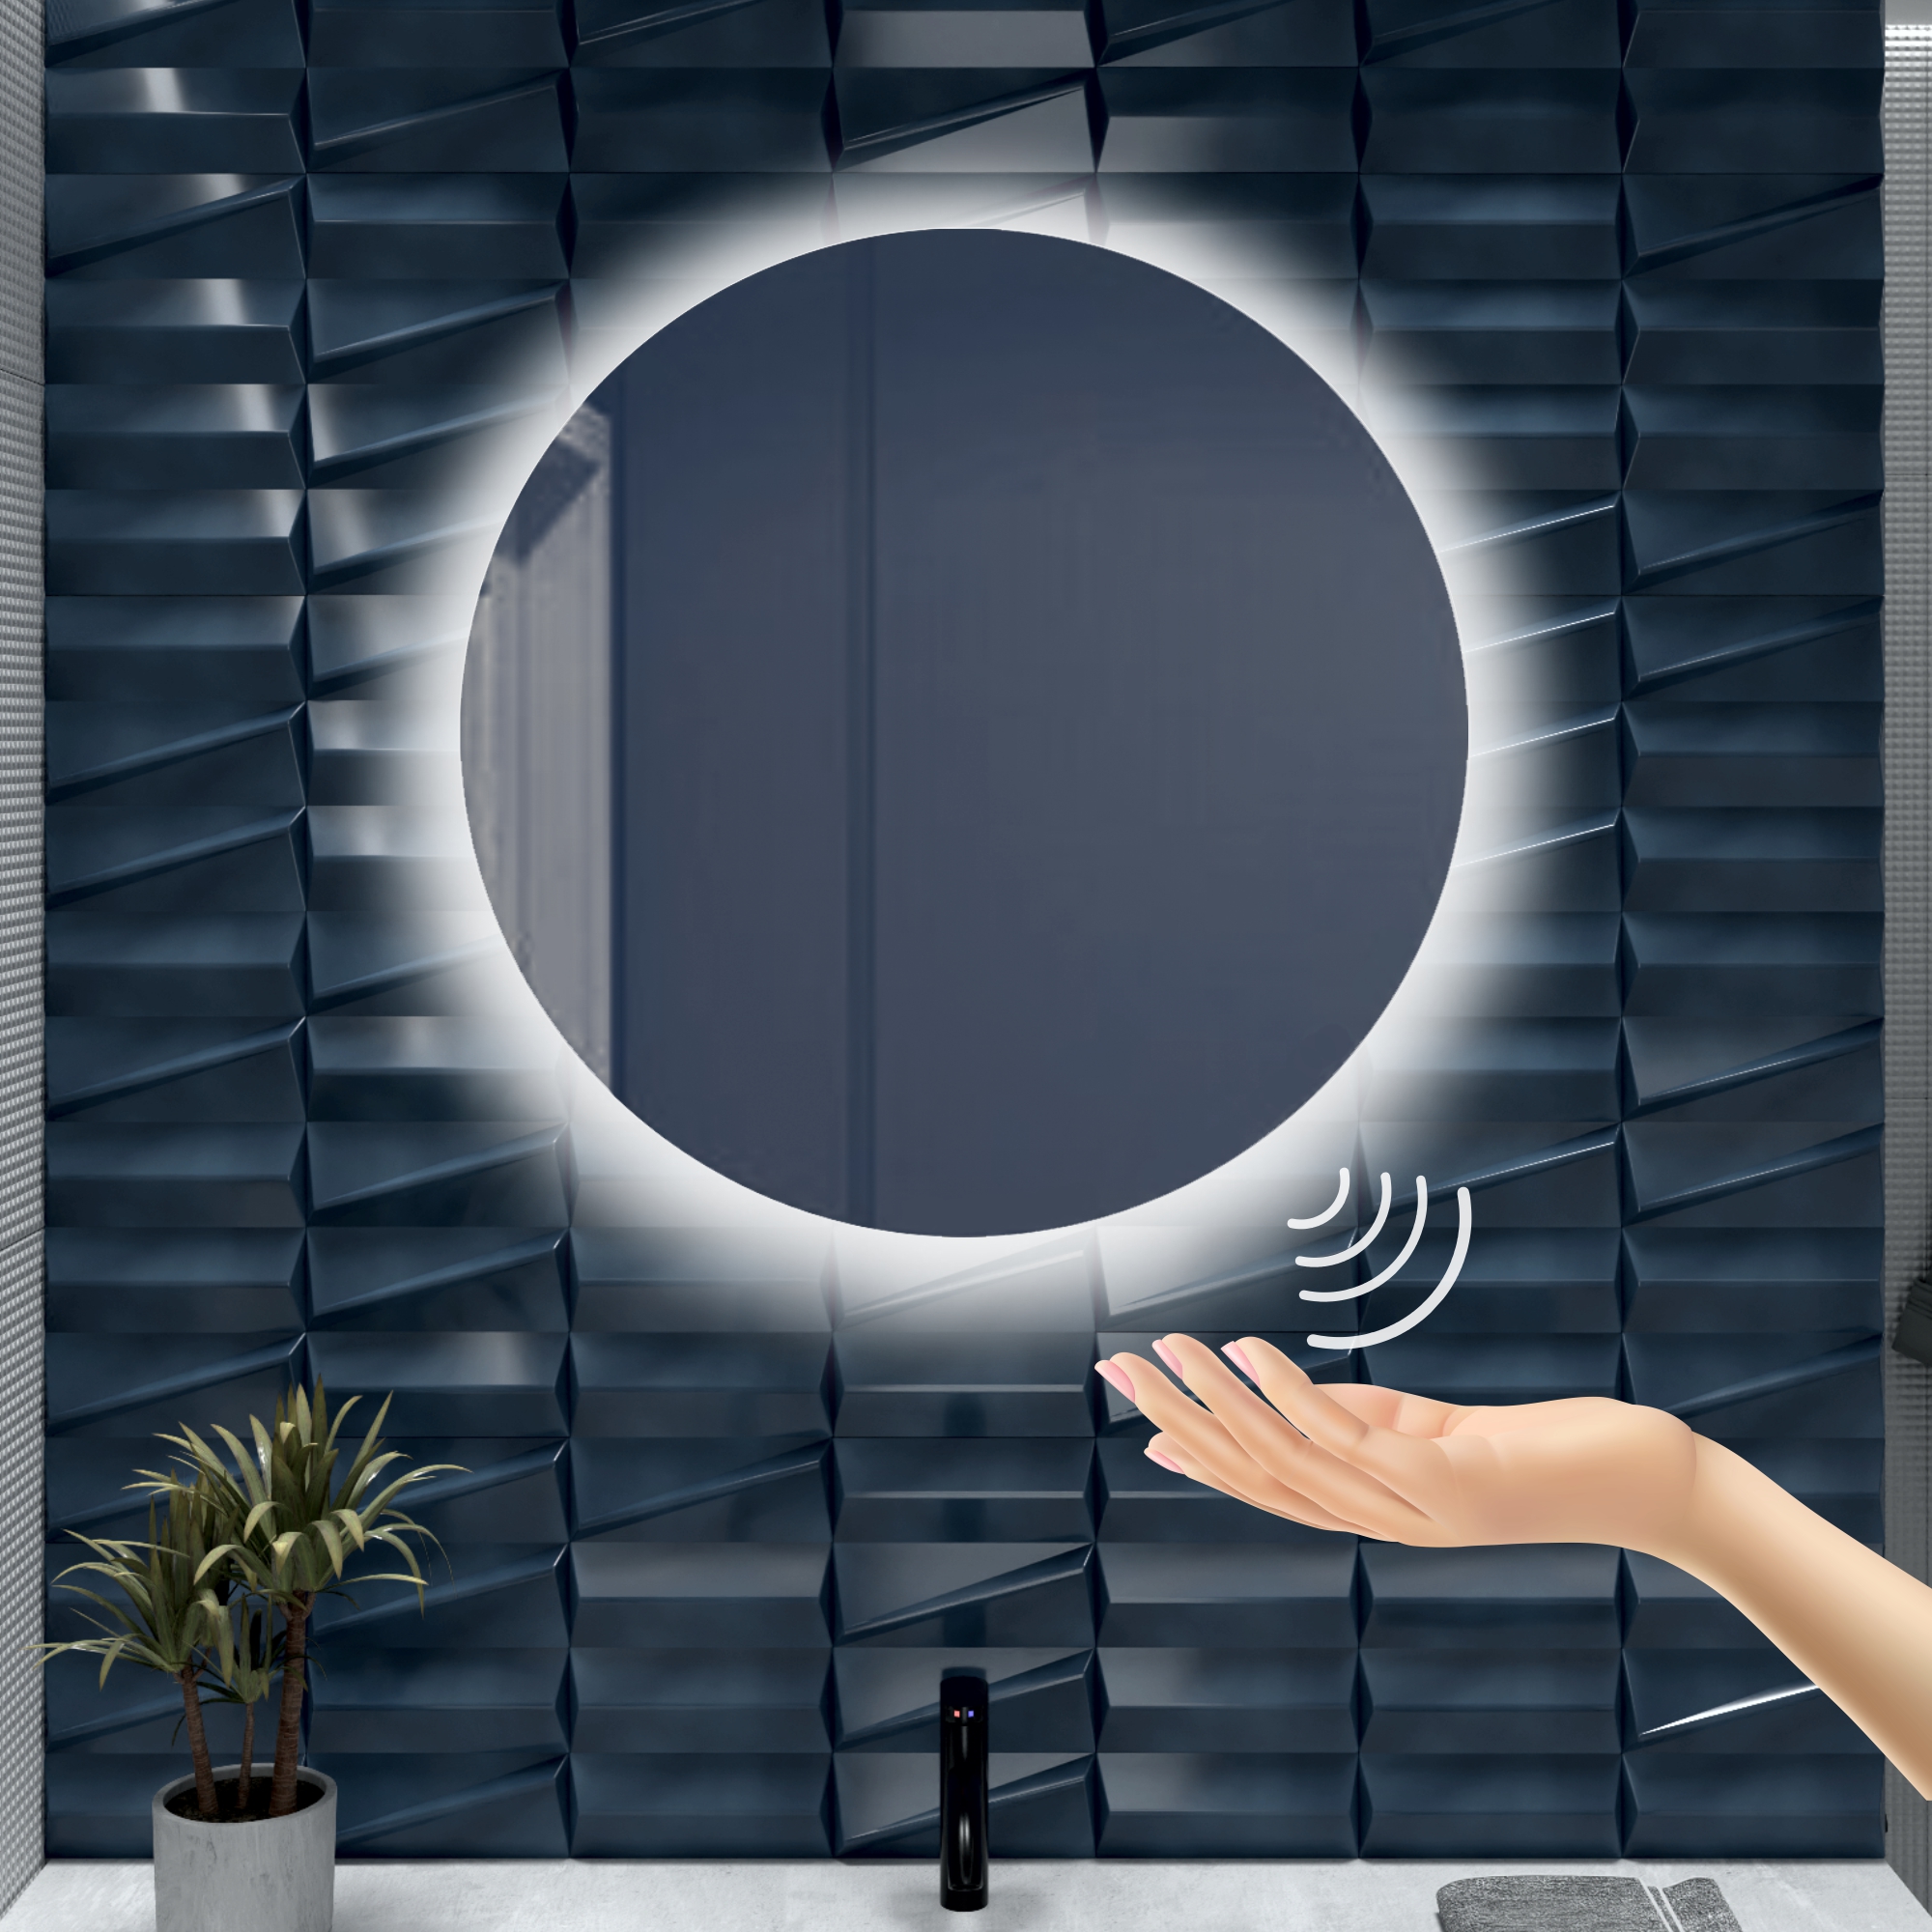 Зеркало для ванной Alfa Mirrors с холодной подсветкой 6500К круглое 80см, арт. Na-8Vzh зеркало настенное genglass ggl 03 m 6000 1 с холодной подсветкой круглое d80